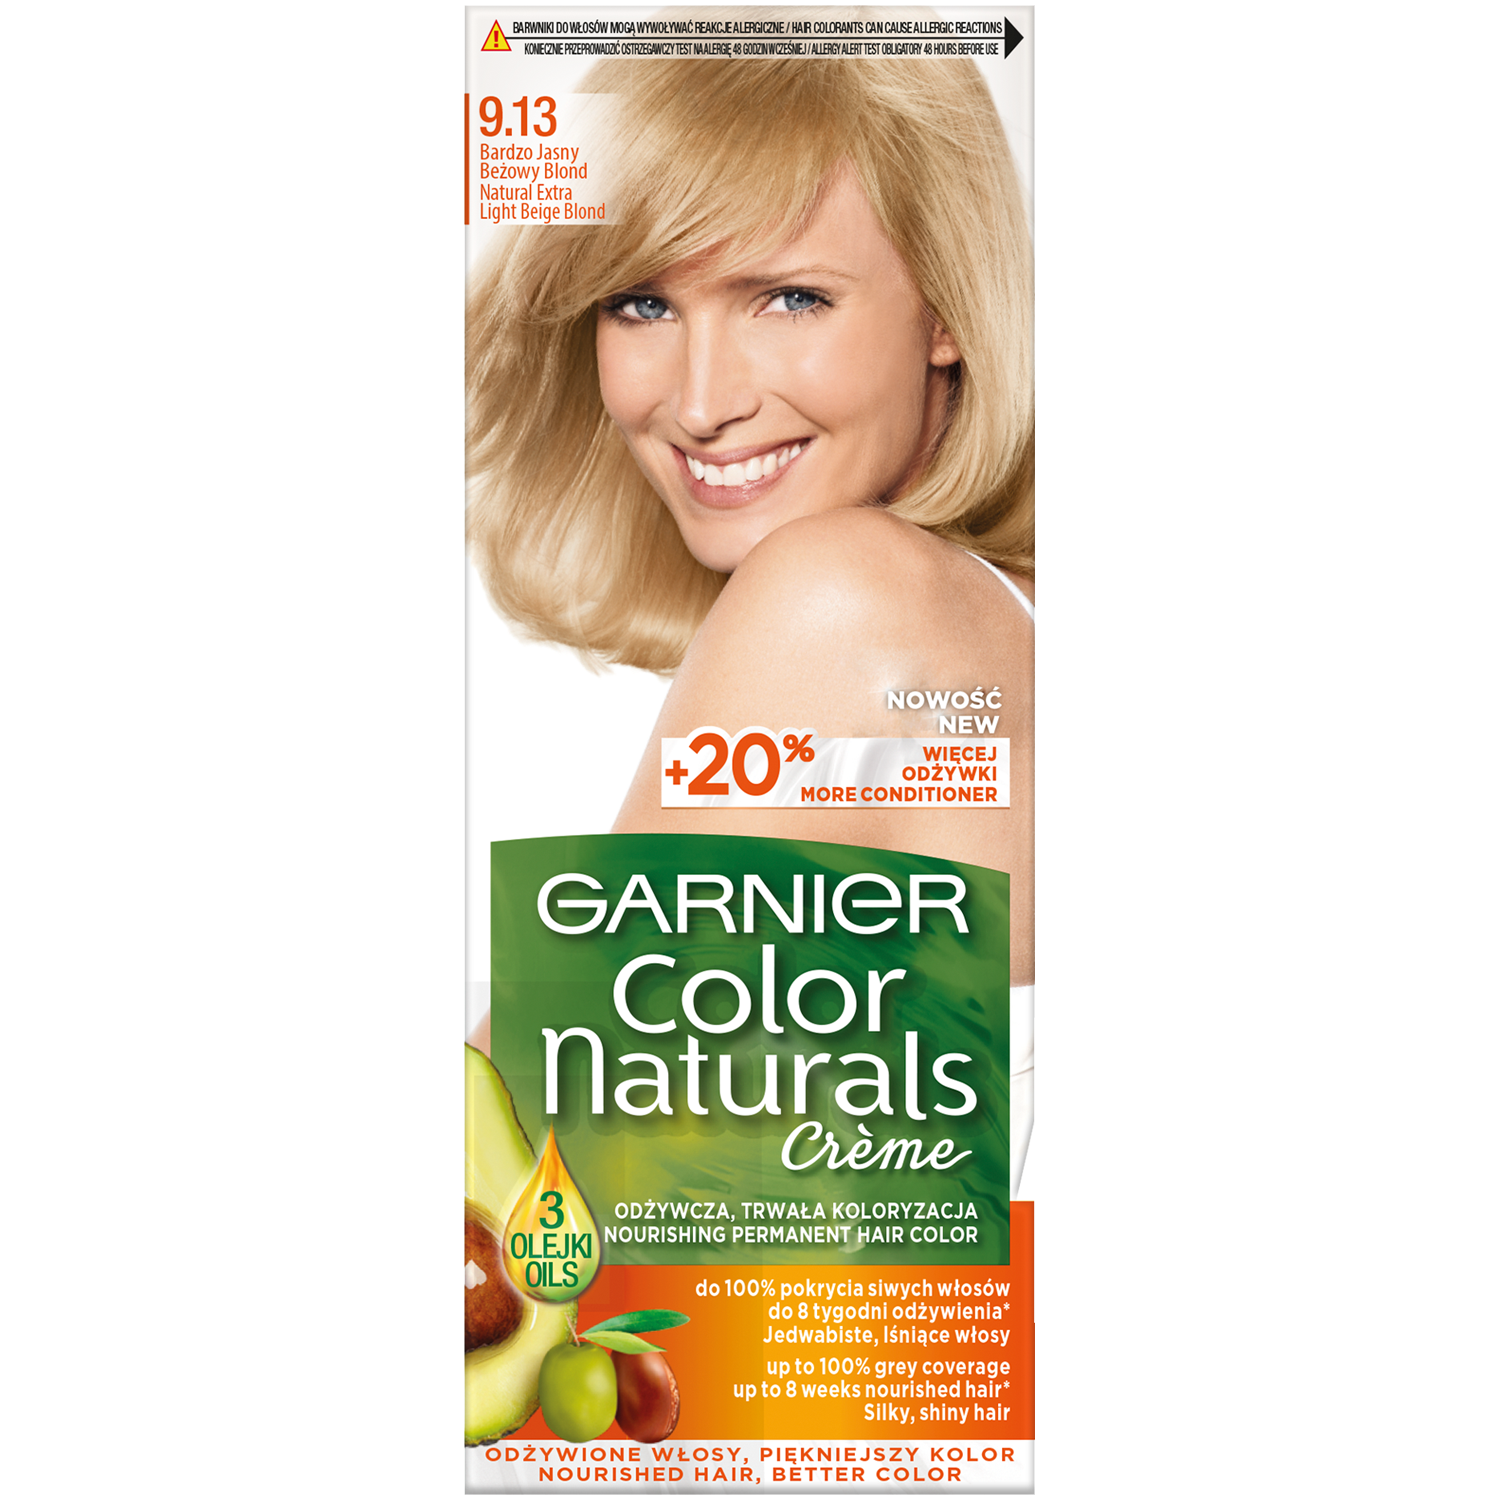 Garnier Color Naturals Créme farba do włosów 9.13 bardzo jasny beżowy blond,  1 opak. | hebe.pl